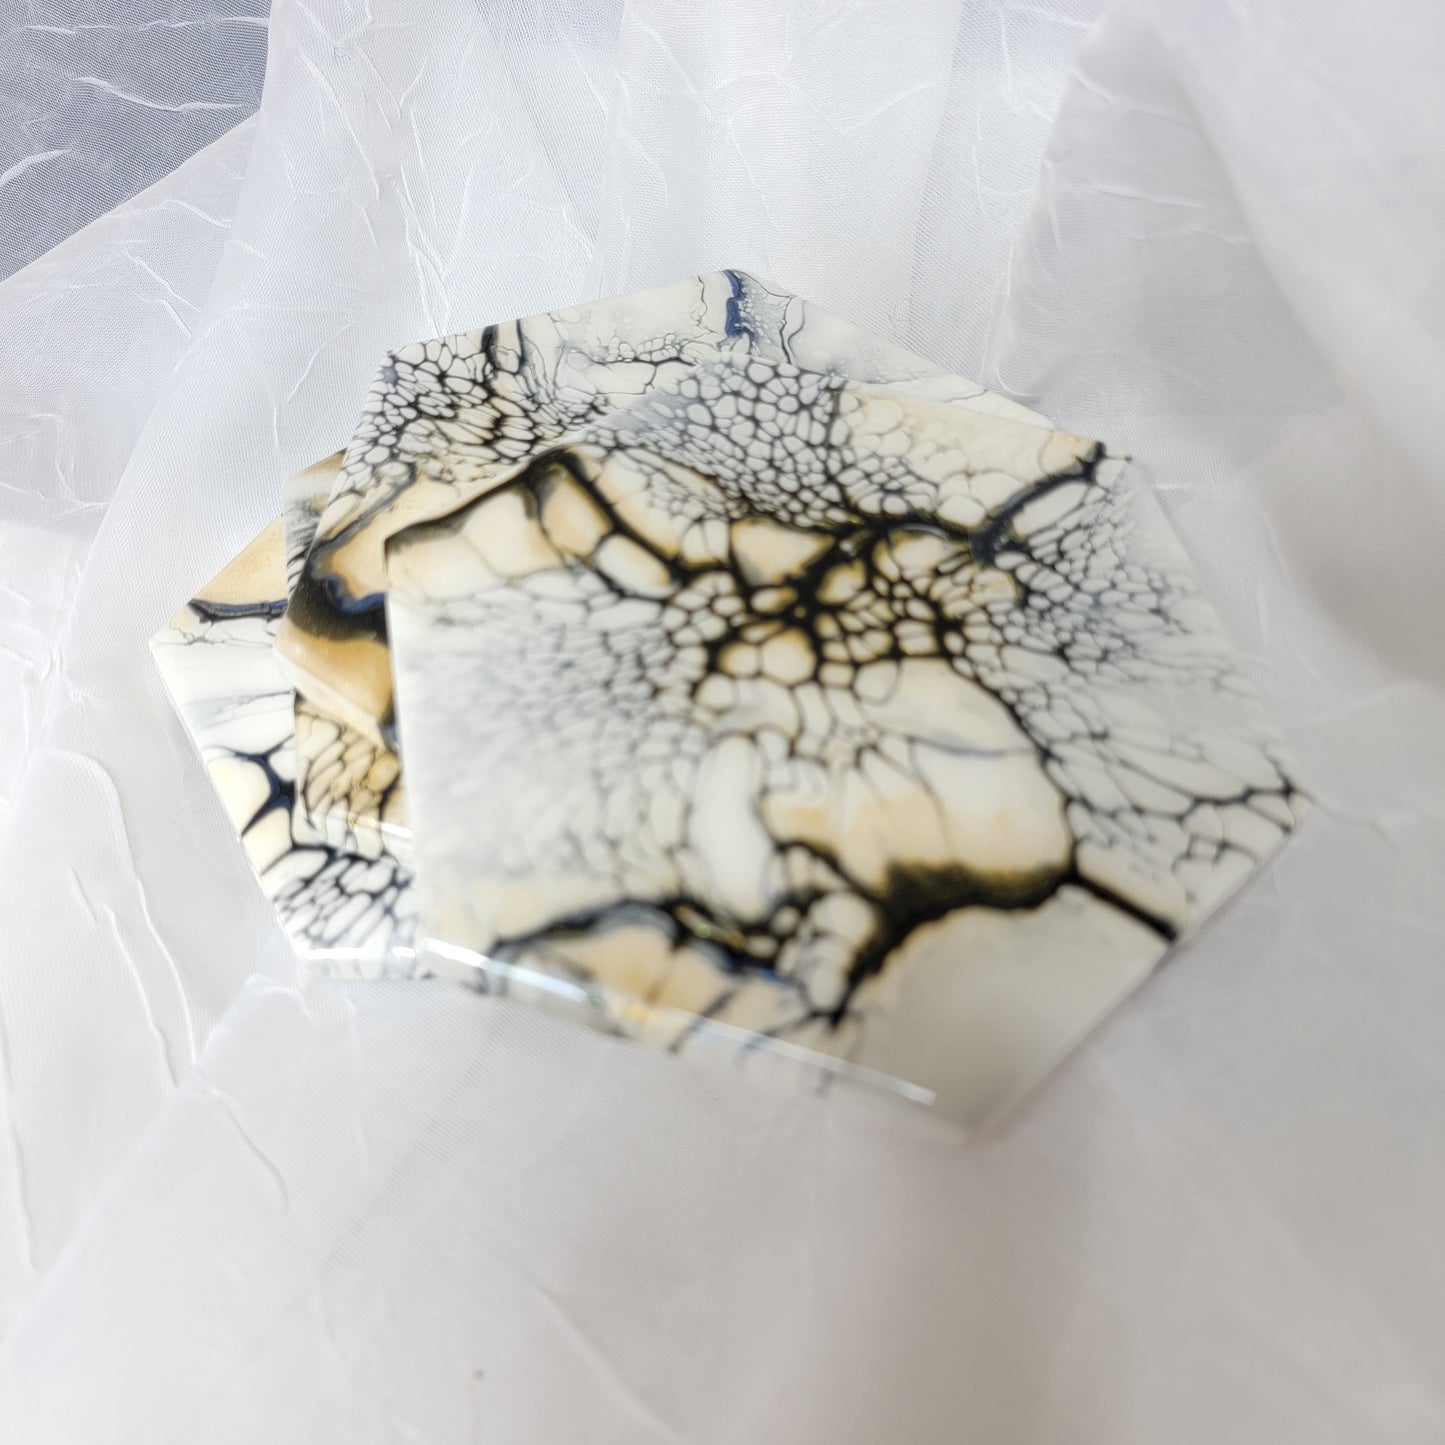 Beautiful Resin Marble Art Coasters - Food Safe